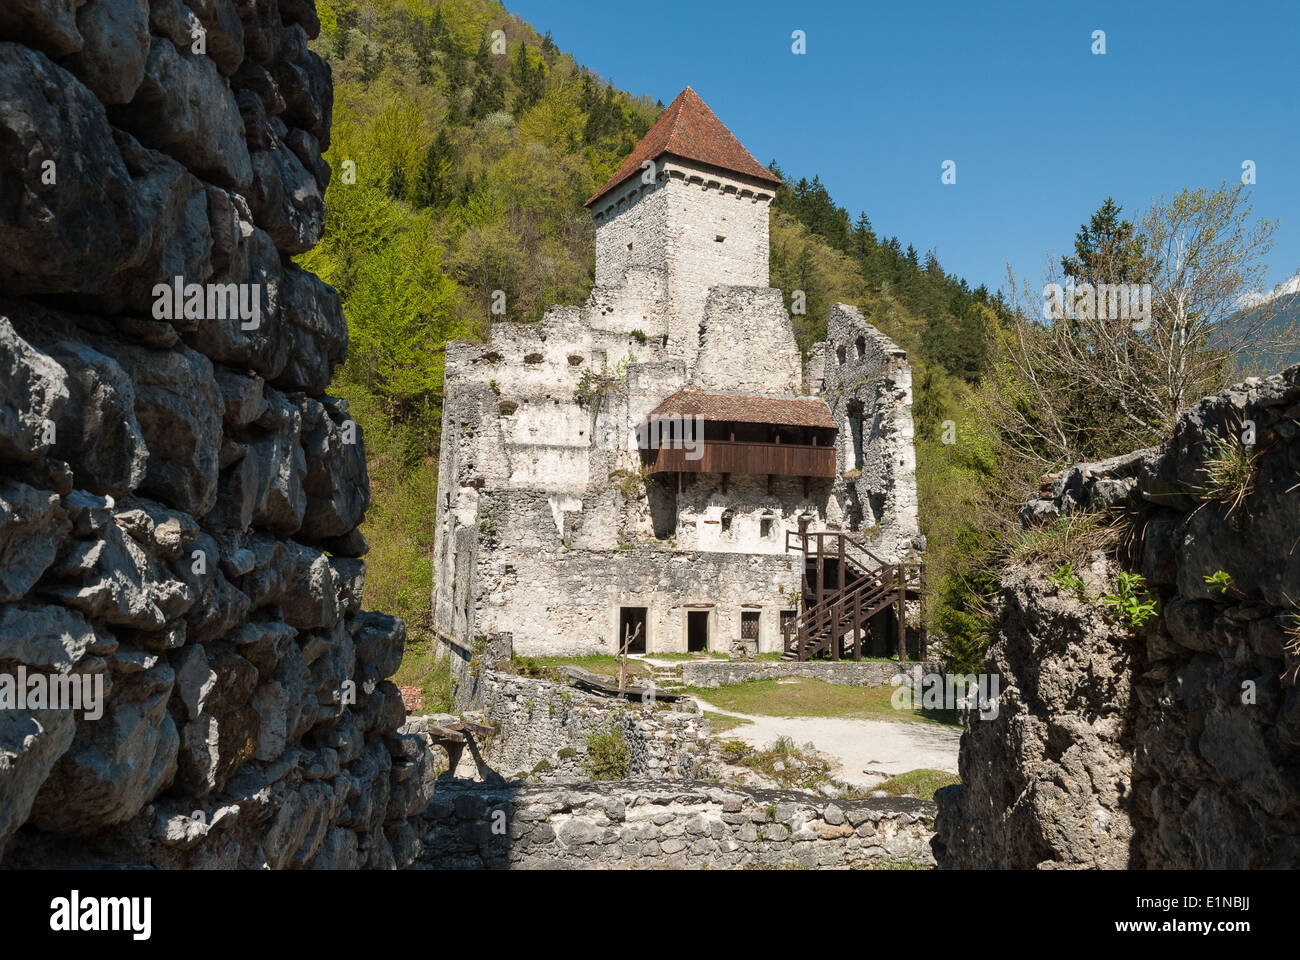 Las ruinas del castillo del siglo XII Kamen, cerca de Begunje na Gorenjskem, Eslovenia Foto de stock